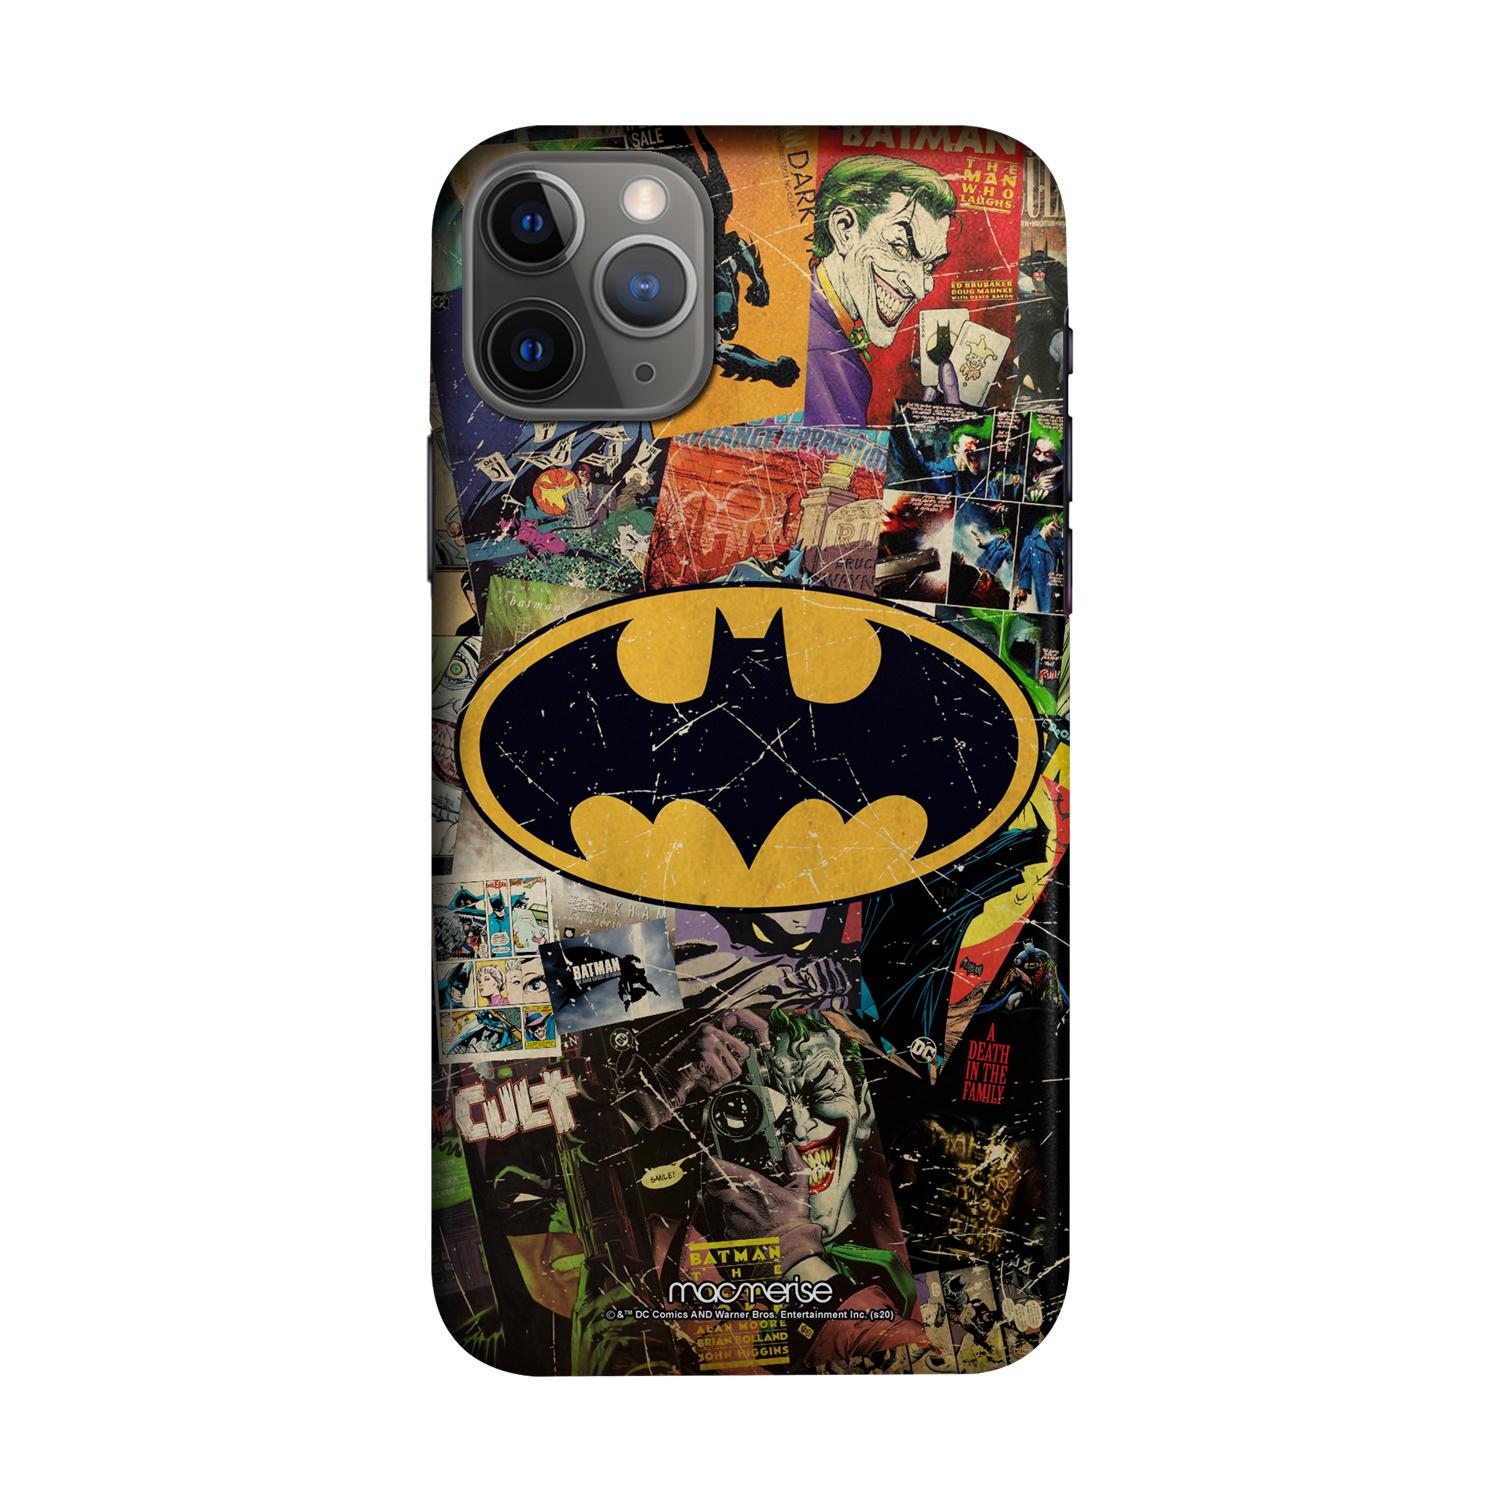 Buy Comic Bat - Sleek Phone Case for iPhone 11 Pro Max Online